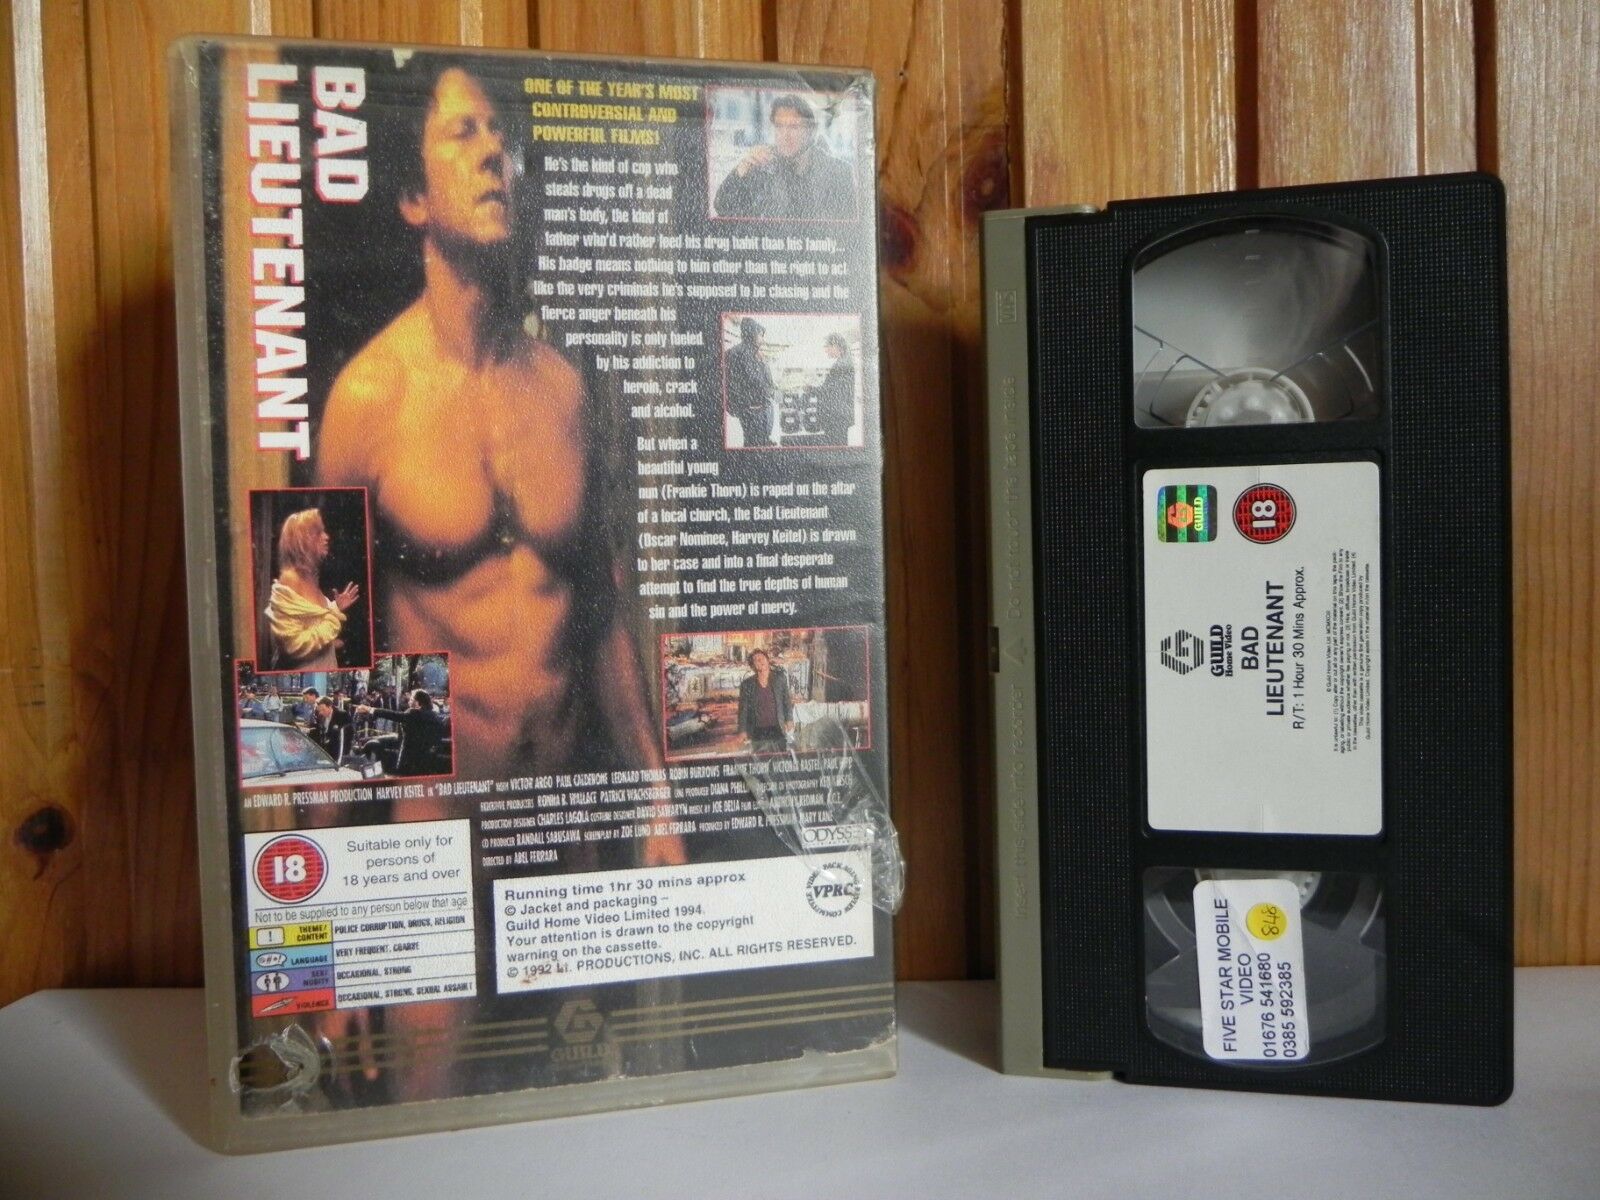 Bad Lieutenant: Offensive Action - Large Box [Rental] - Harvey Keitel - Pal VHS-